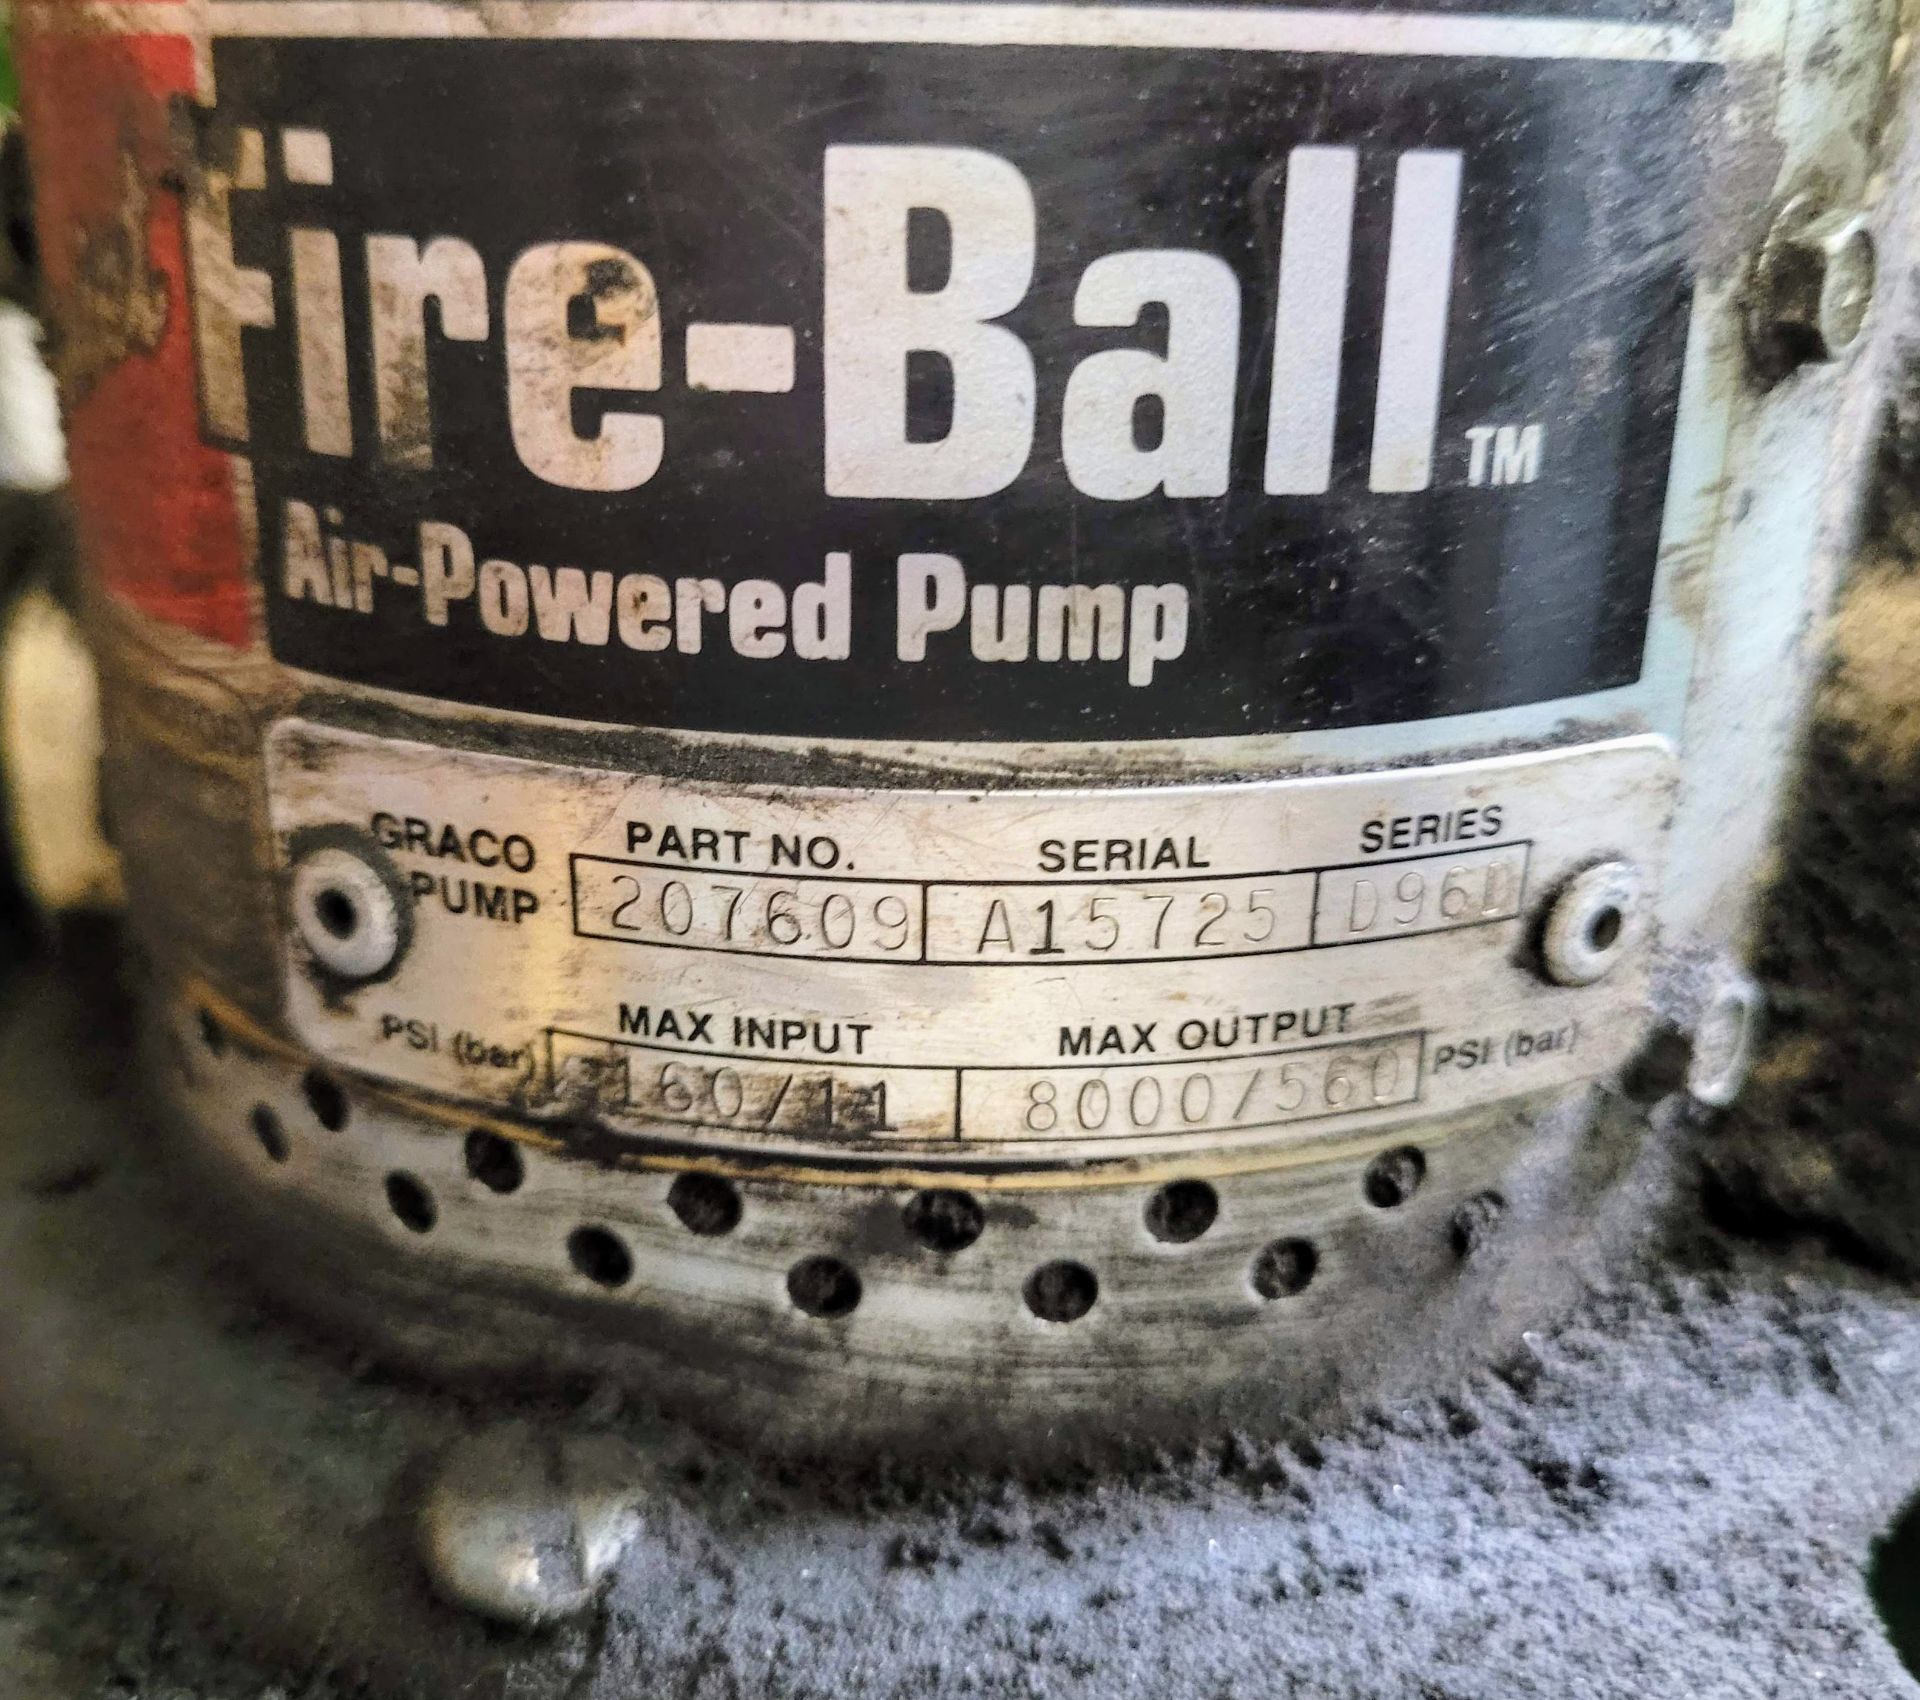 LOT - GRACO FIRE-BALL AIR POWERED PUMP, (3) MANUAL PUMPS, SHELF - Image 3 of 6